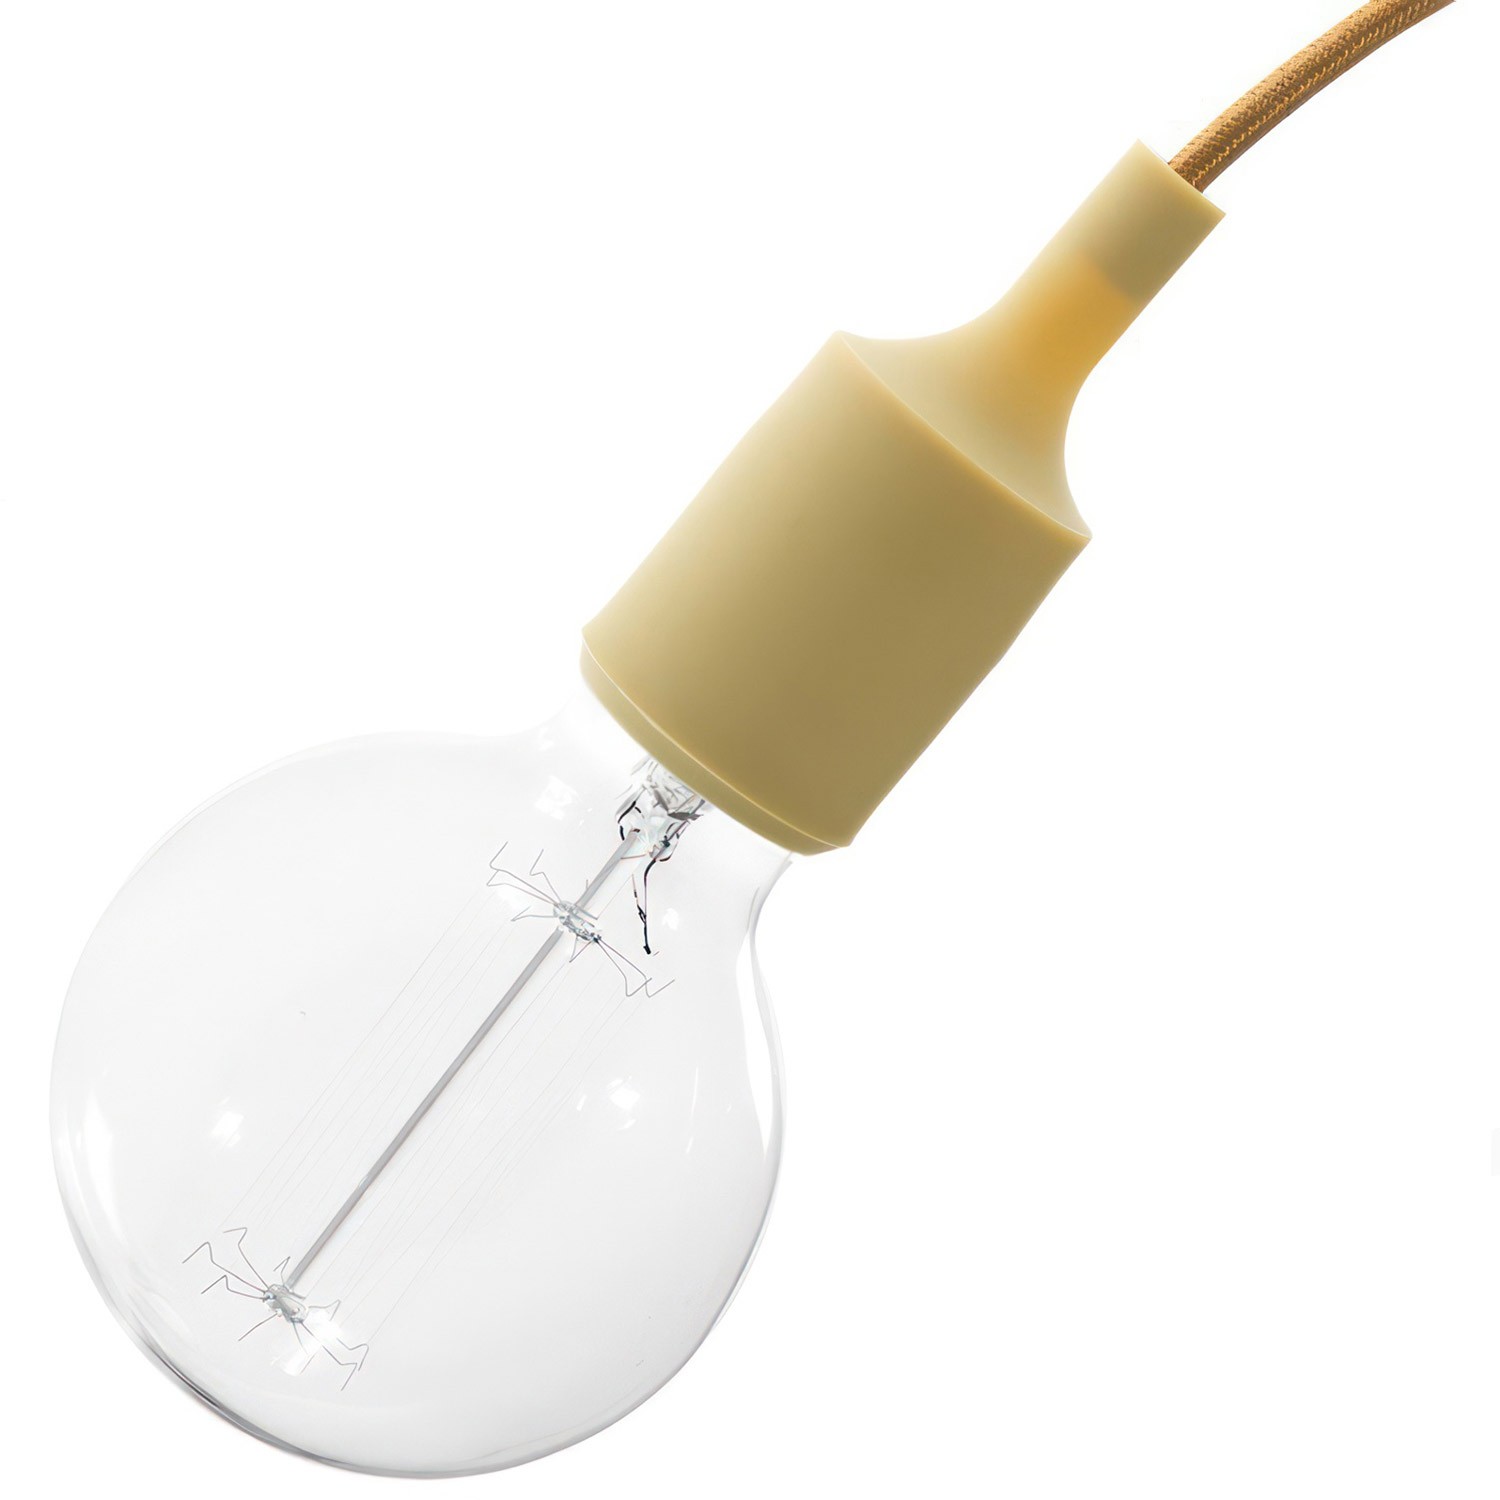 Kit lamphållare E27 i silikon